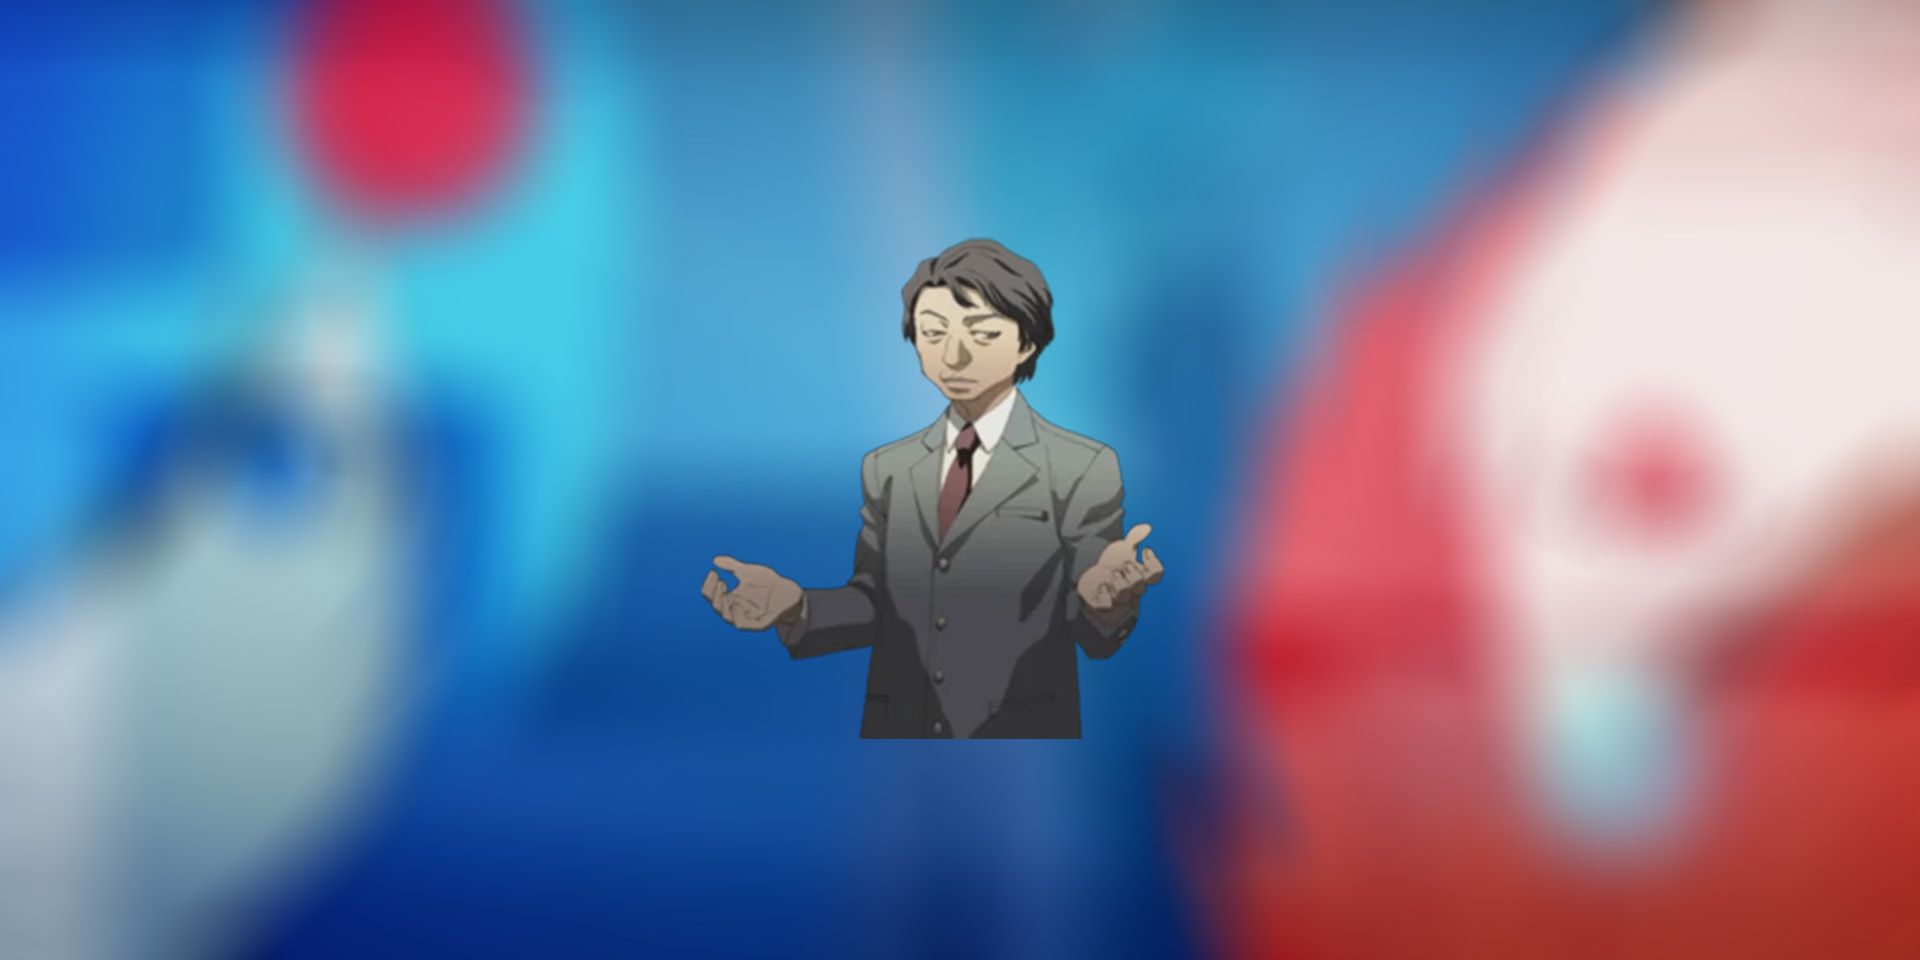 Earn social links as President Tanaka in Persona 3